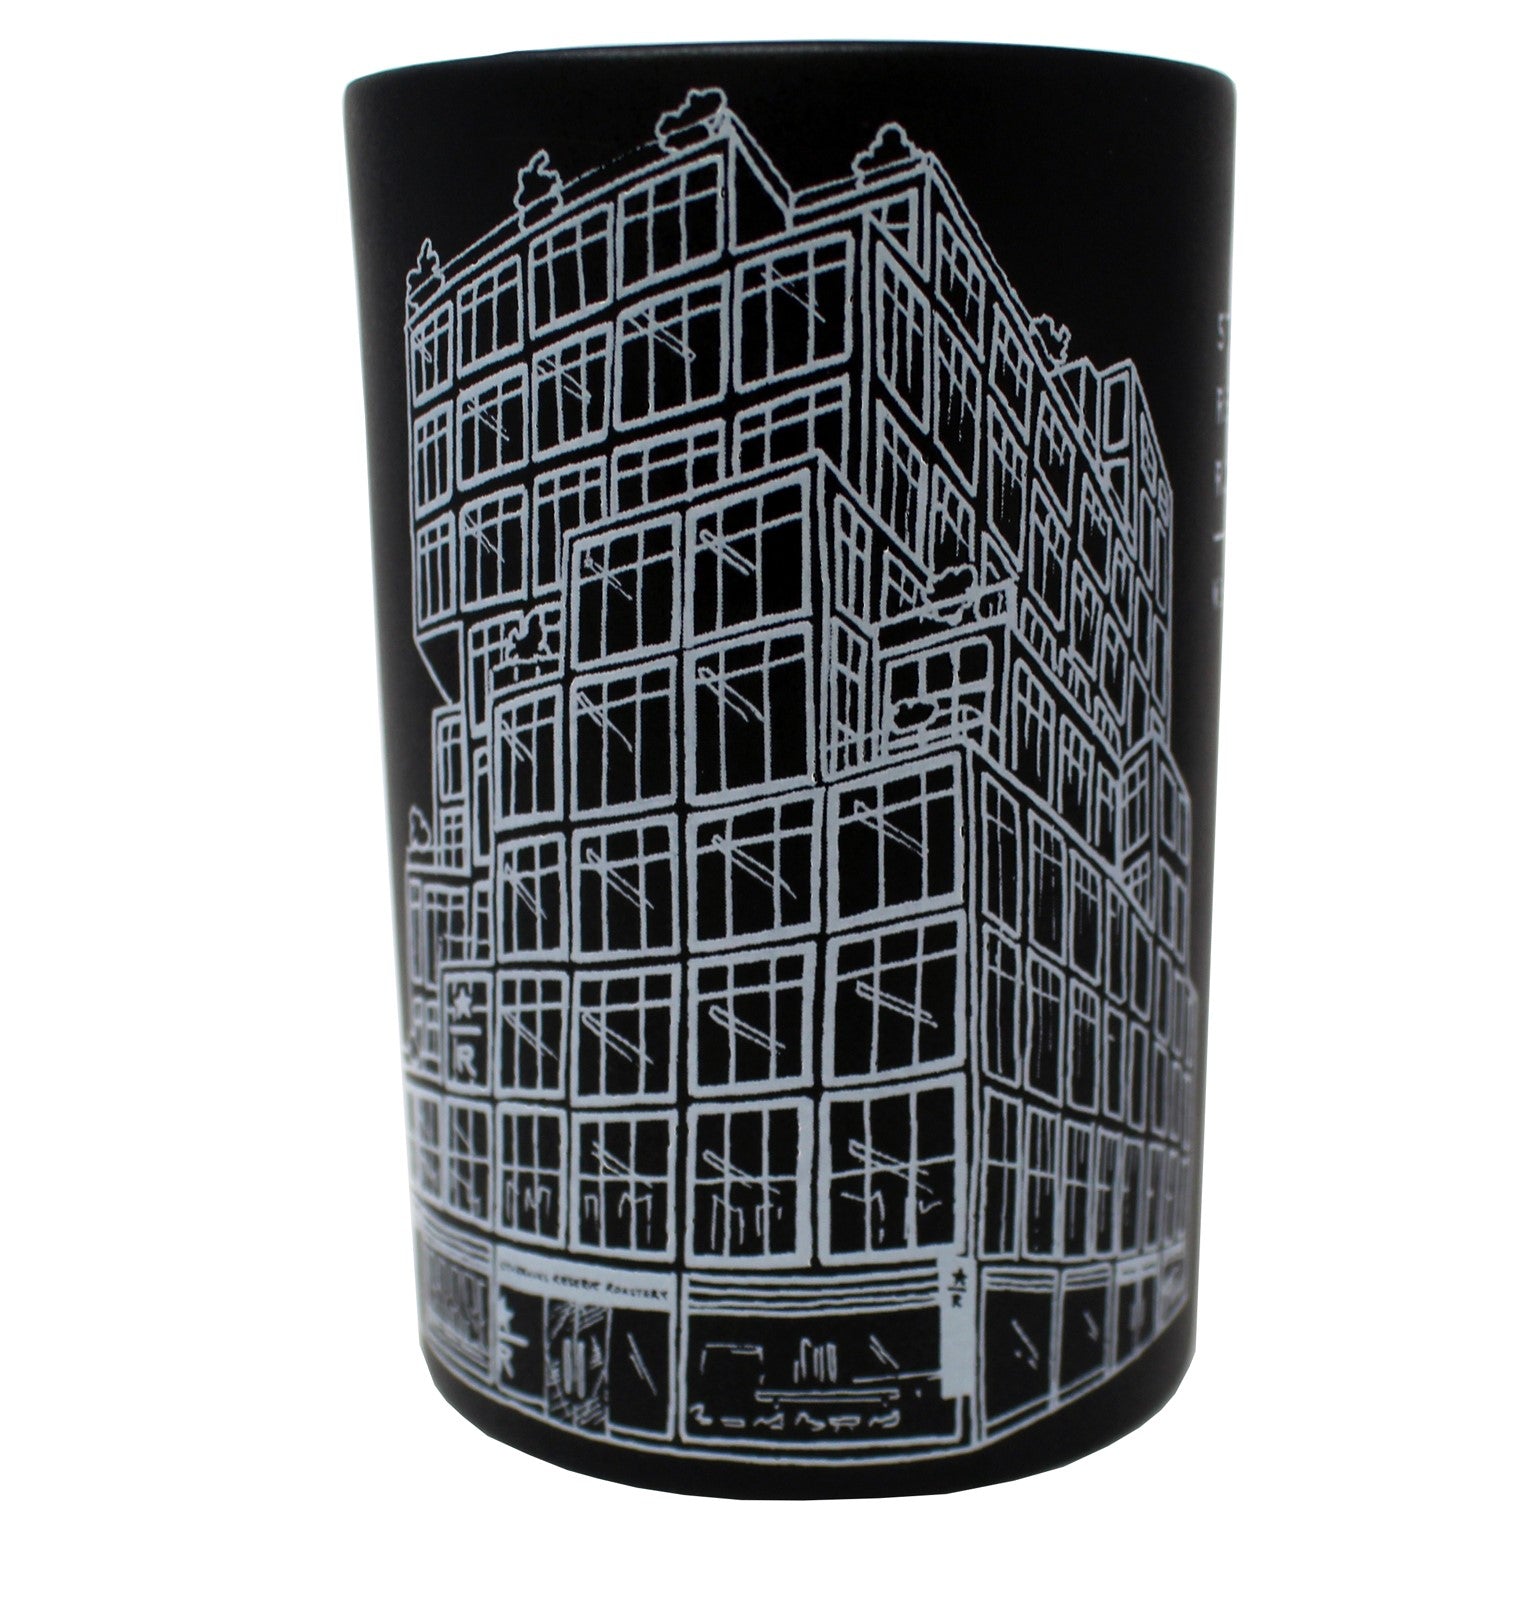 Starbucks Reserve Roastery New York Ceramic Mug 10 Oz, Black